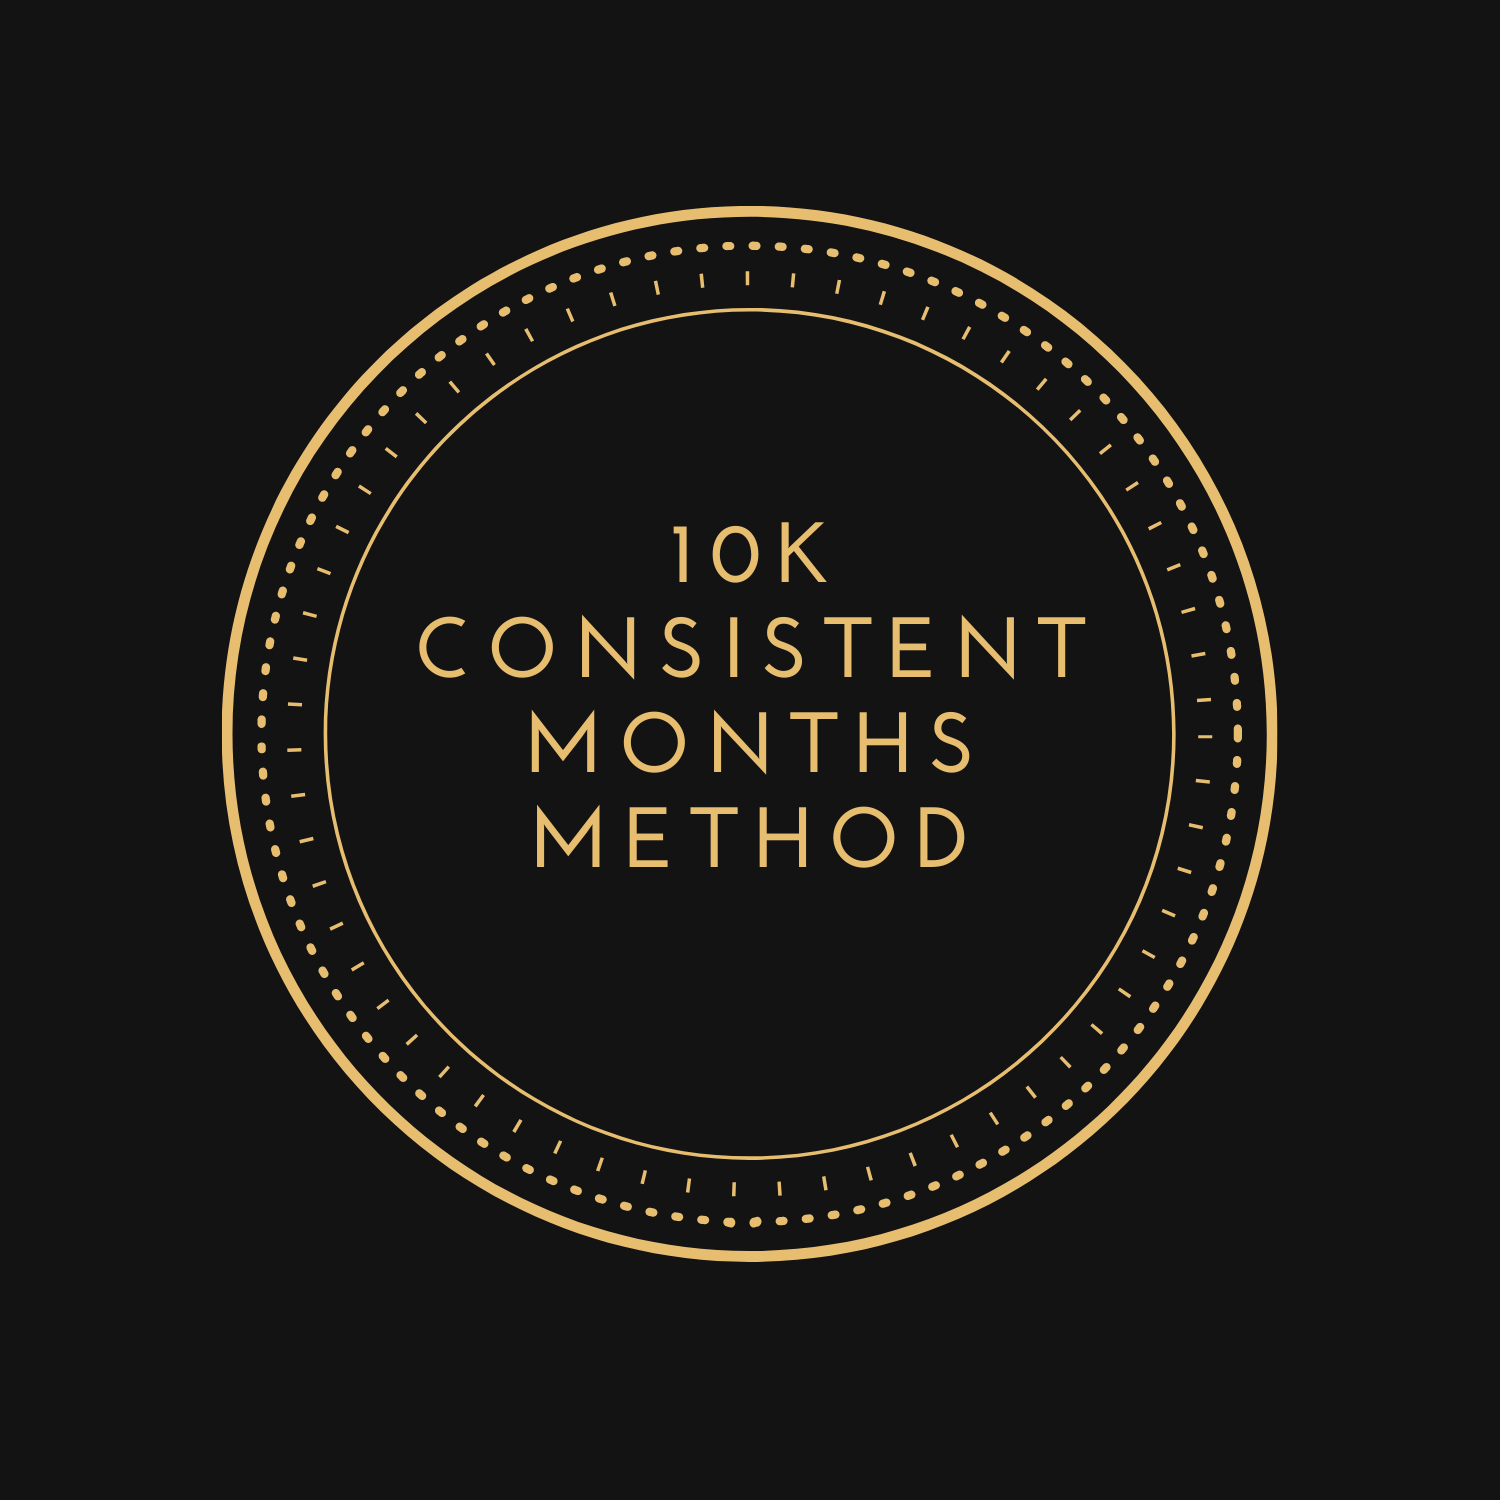 10k consistent months method